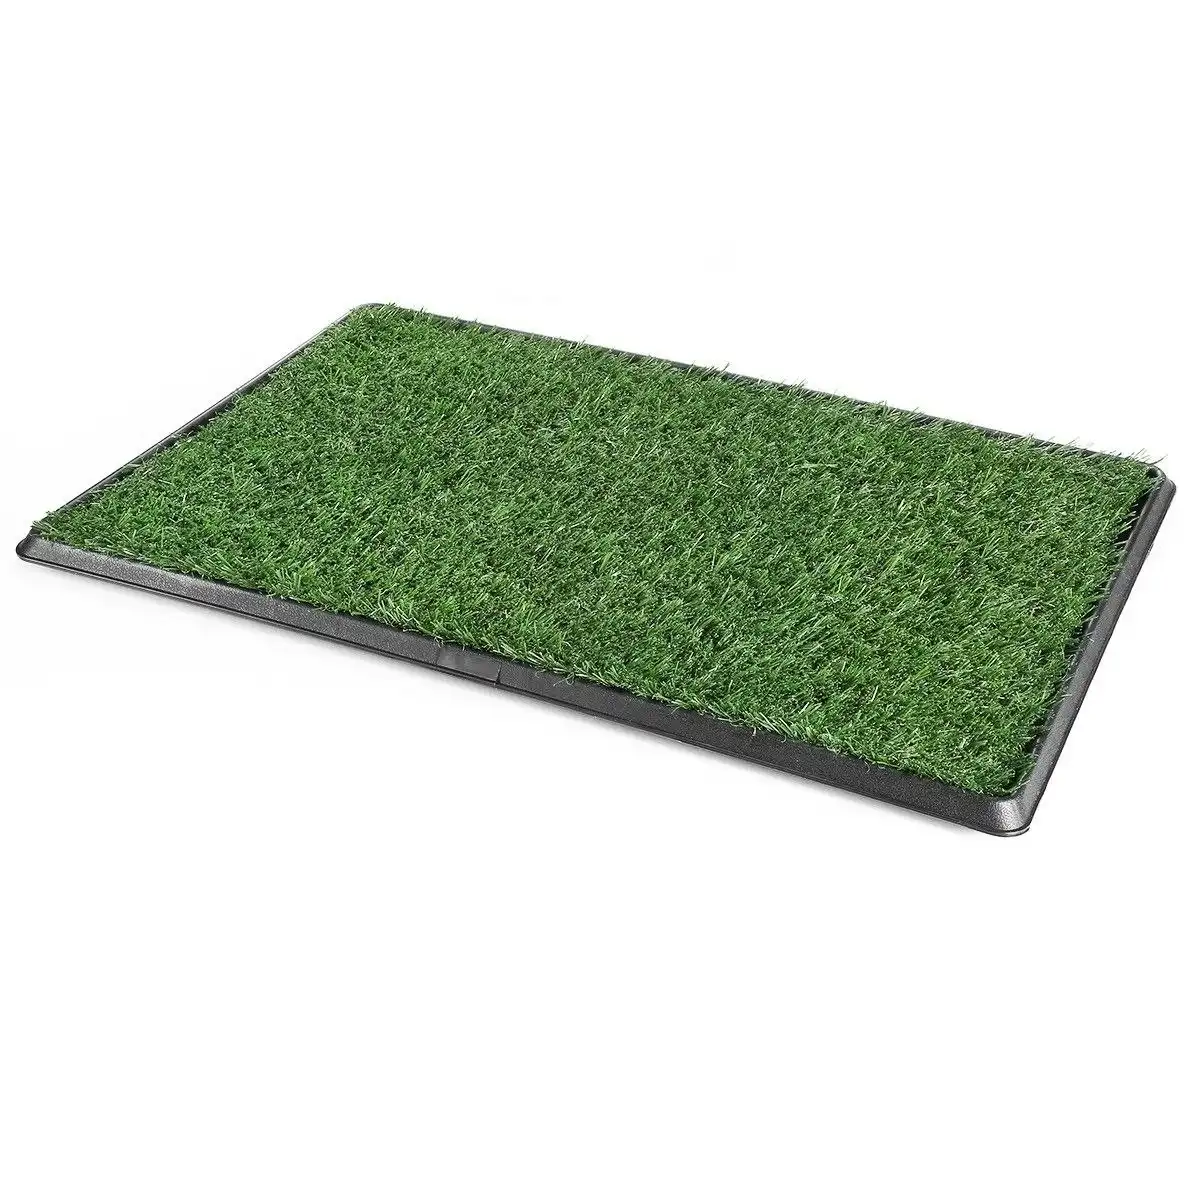 Ausway Pet Toilet Training Pad Artificial Grass Mat